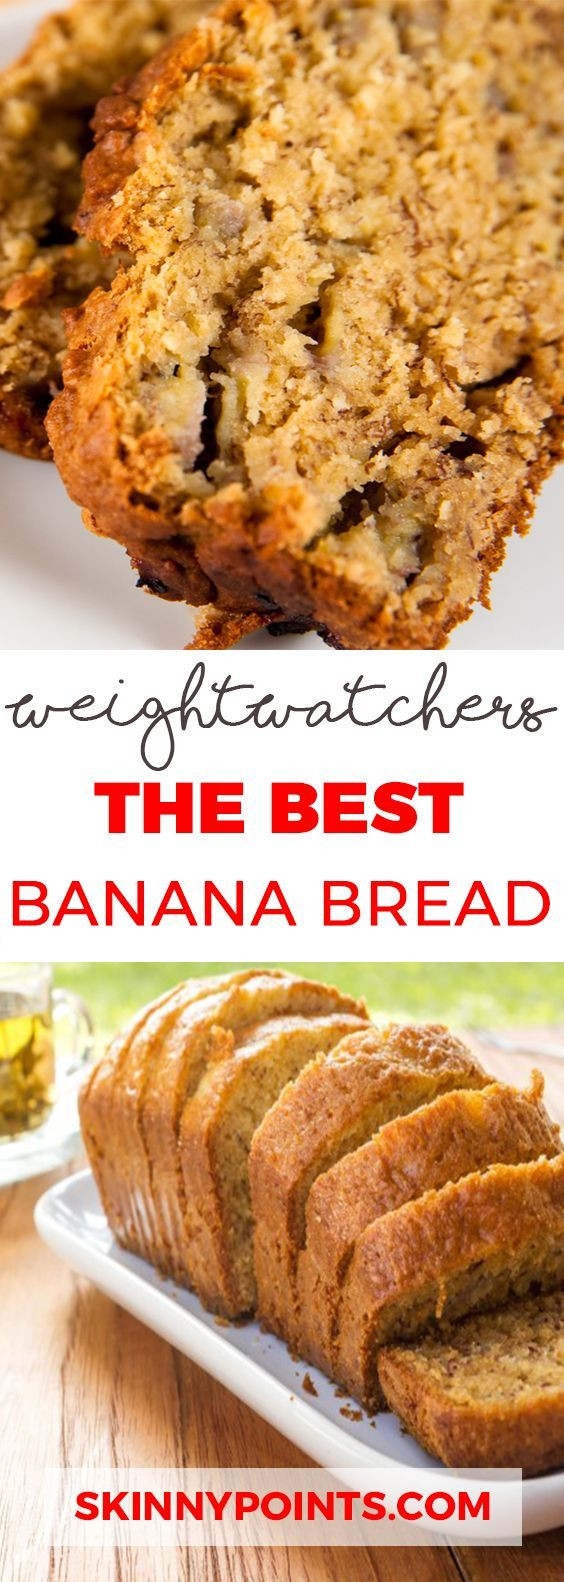 Weight Watchers Banana Bread Recipe
 The Best Banana Bread COOKING WEIGHT WATCHERS